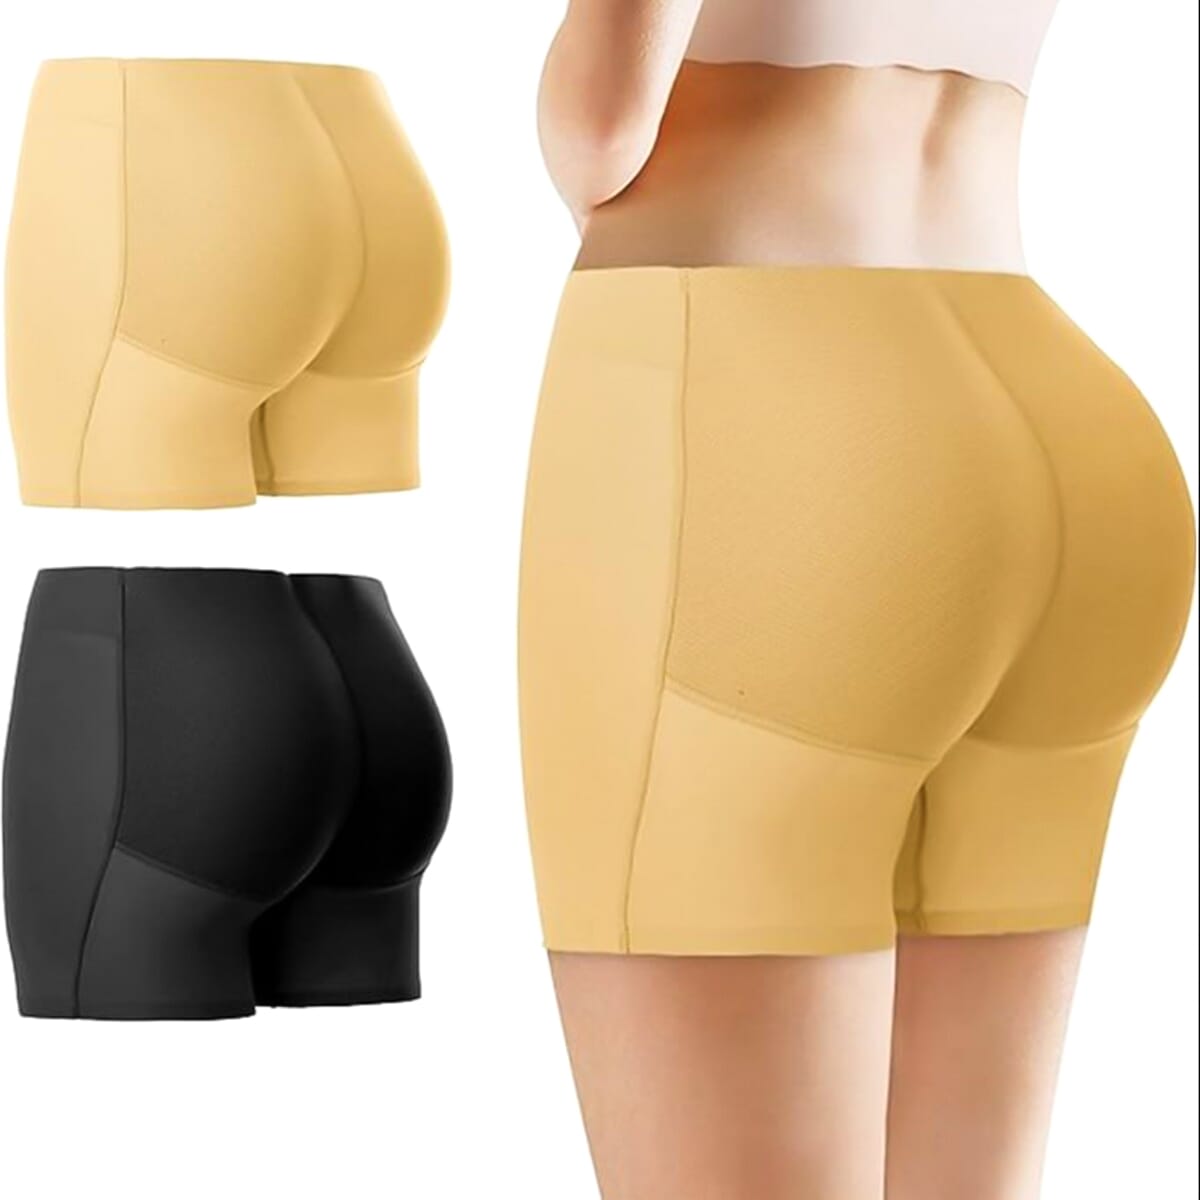 GLAMORAS Nylon Spandex High Waist Seamless Under Skirt Shorts for